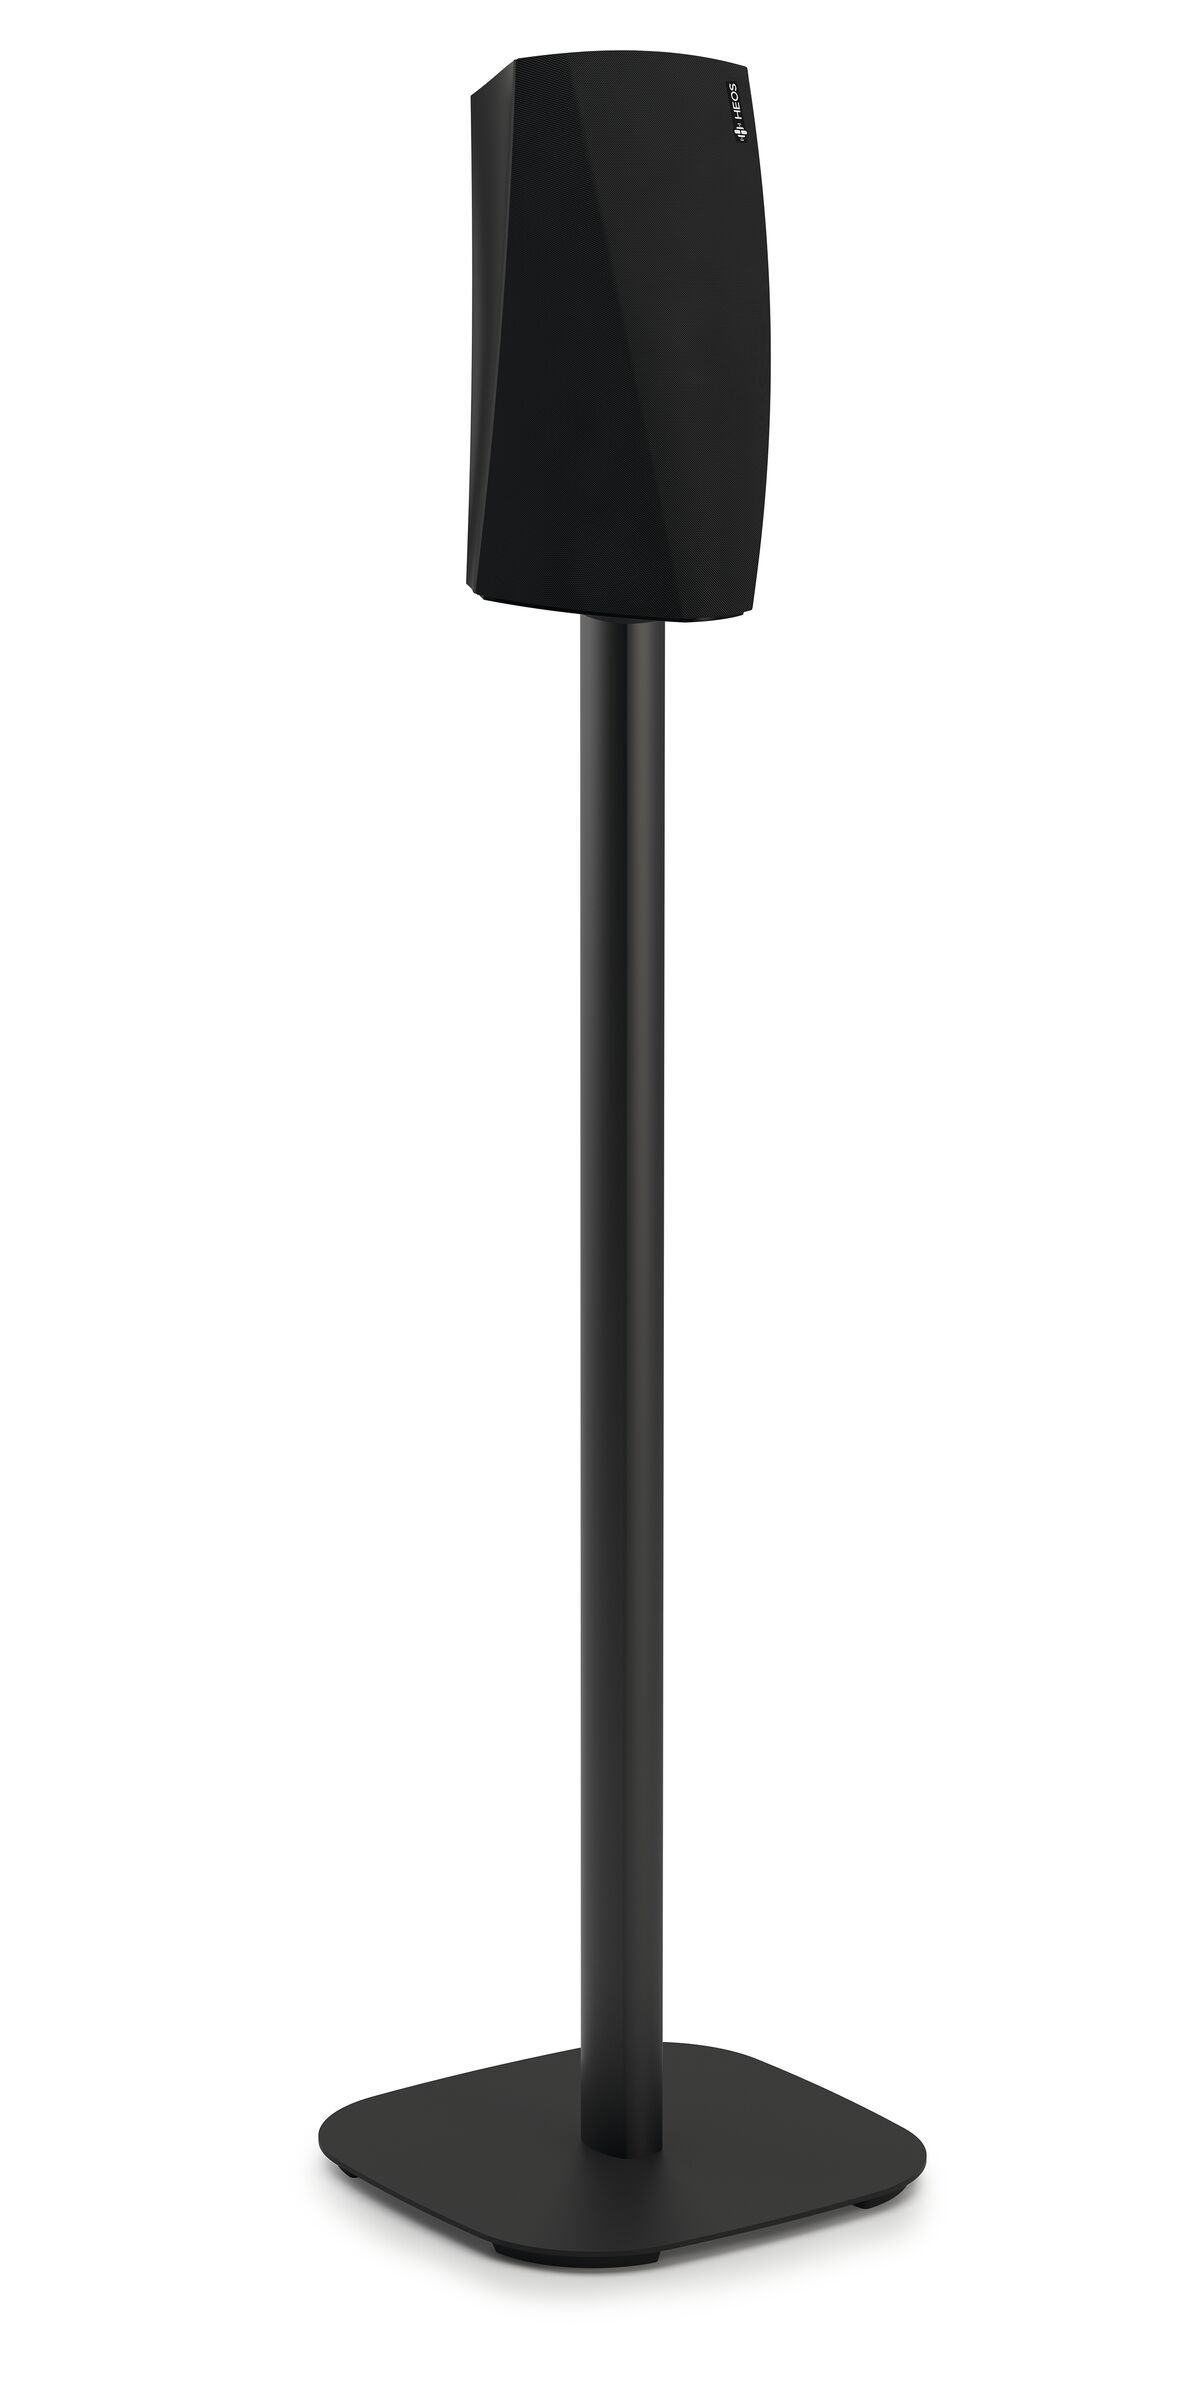 Vogel's SOUND 5313 Speaker standaard voor Denon HEOS 1 / HEOS 3 luidspreker (zwart) - Application